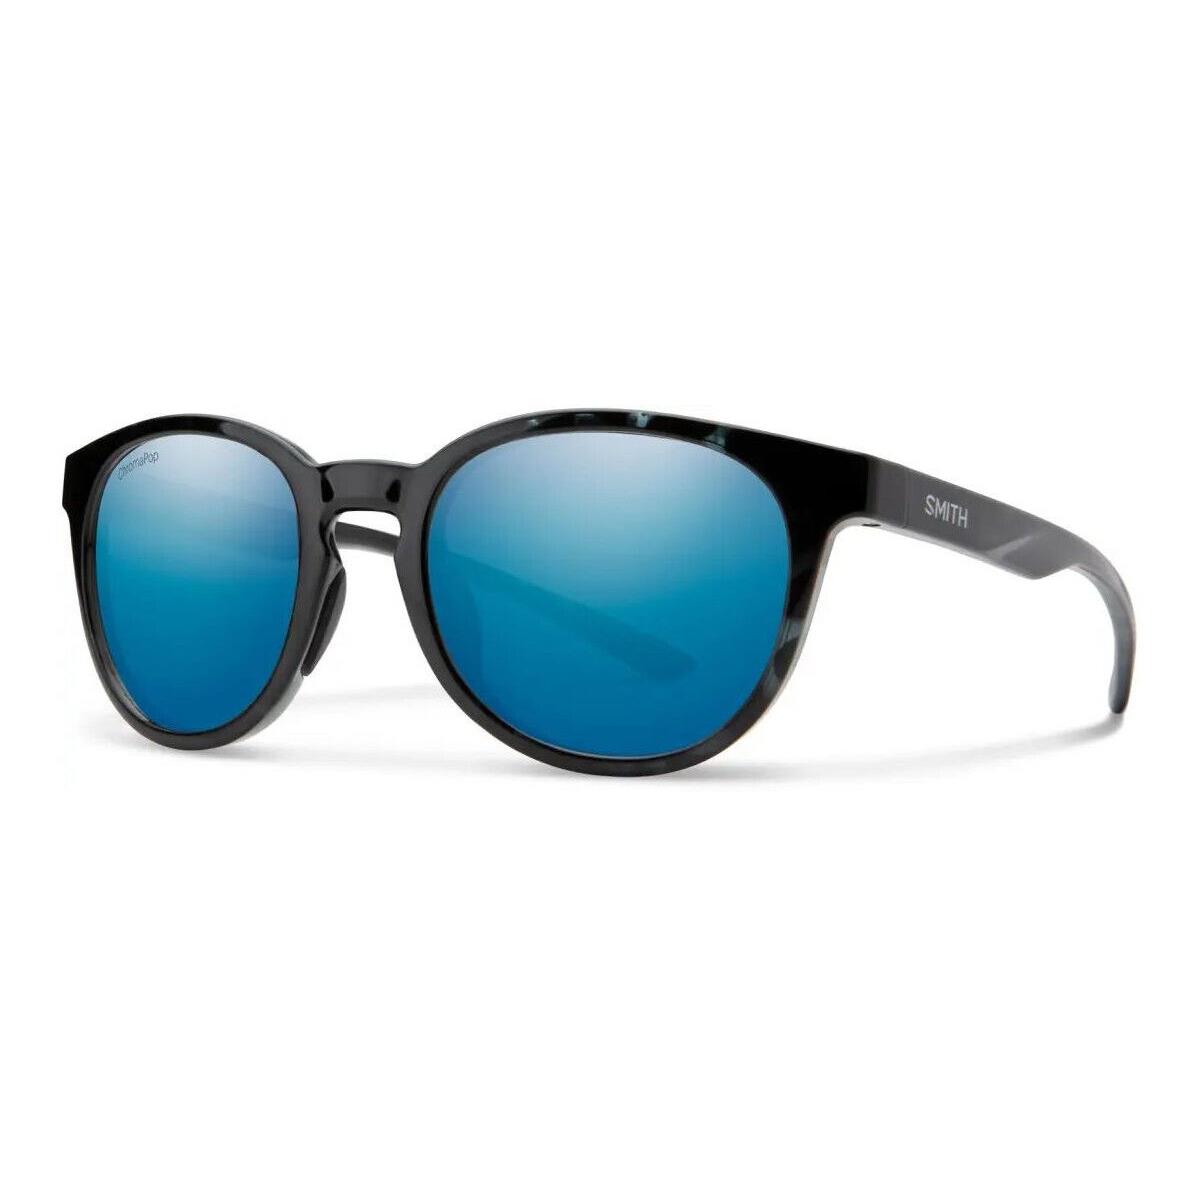 Smith Optics Eastbank Sunglasses - Chromapop Polarized Lenses